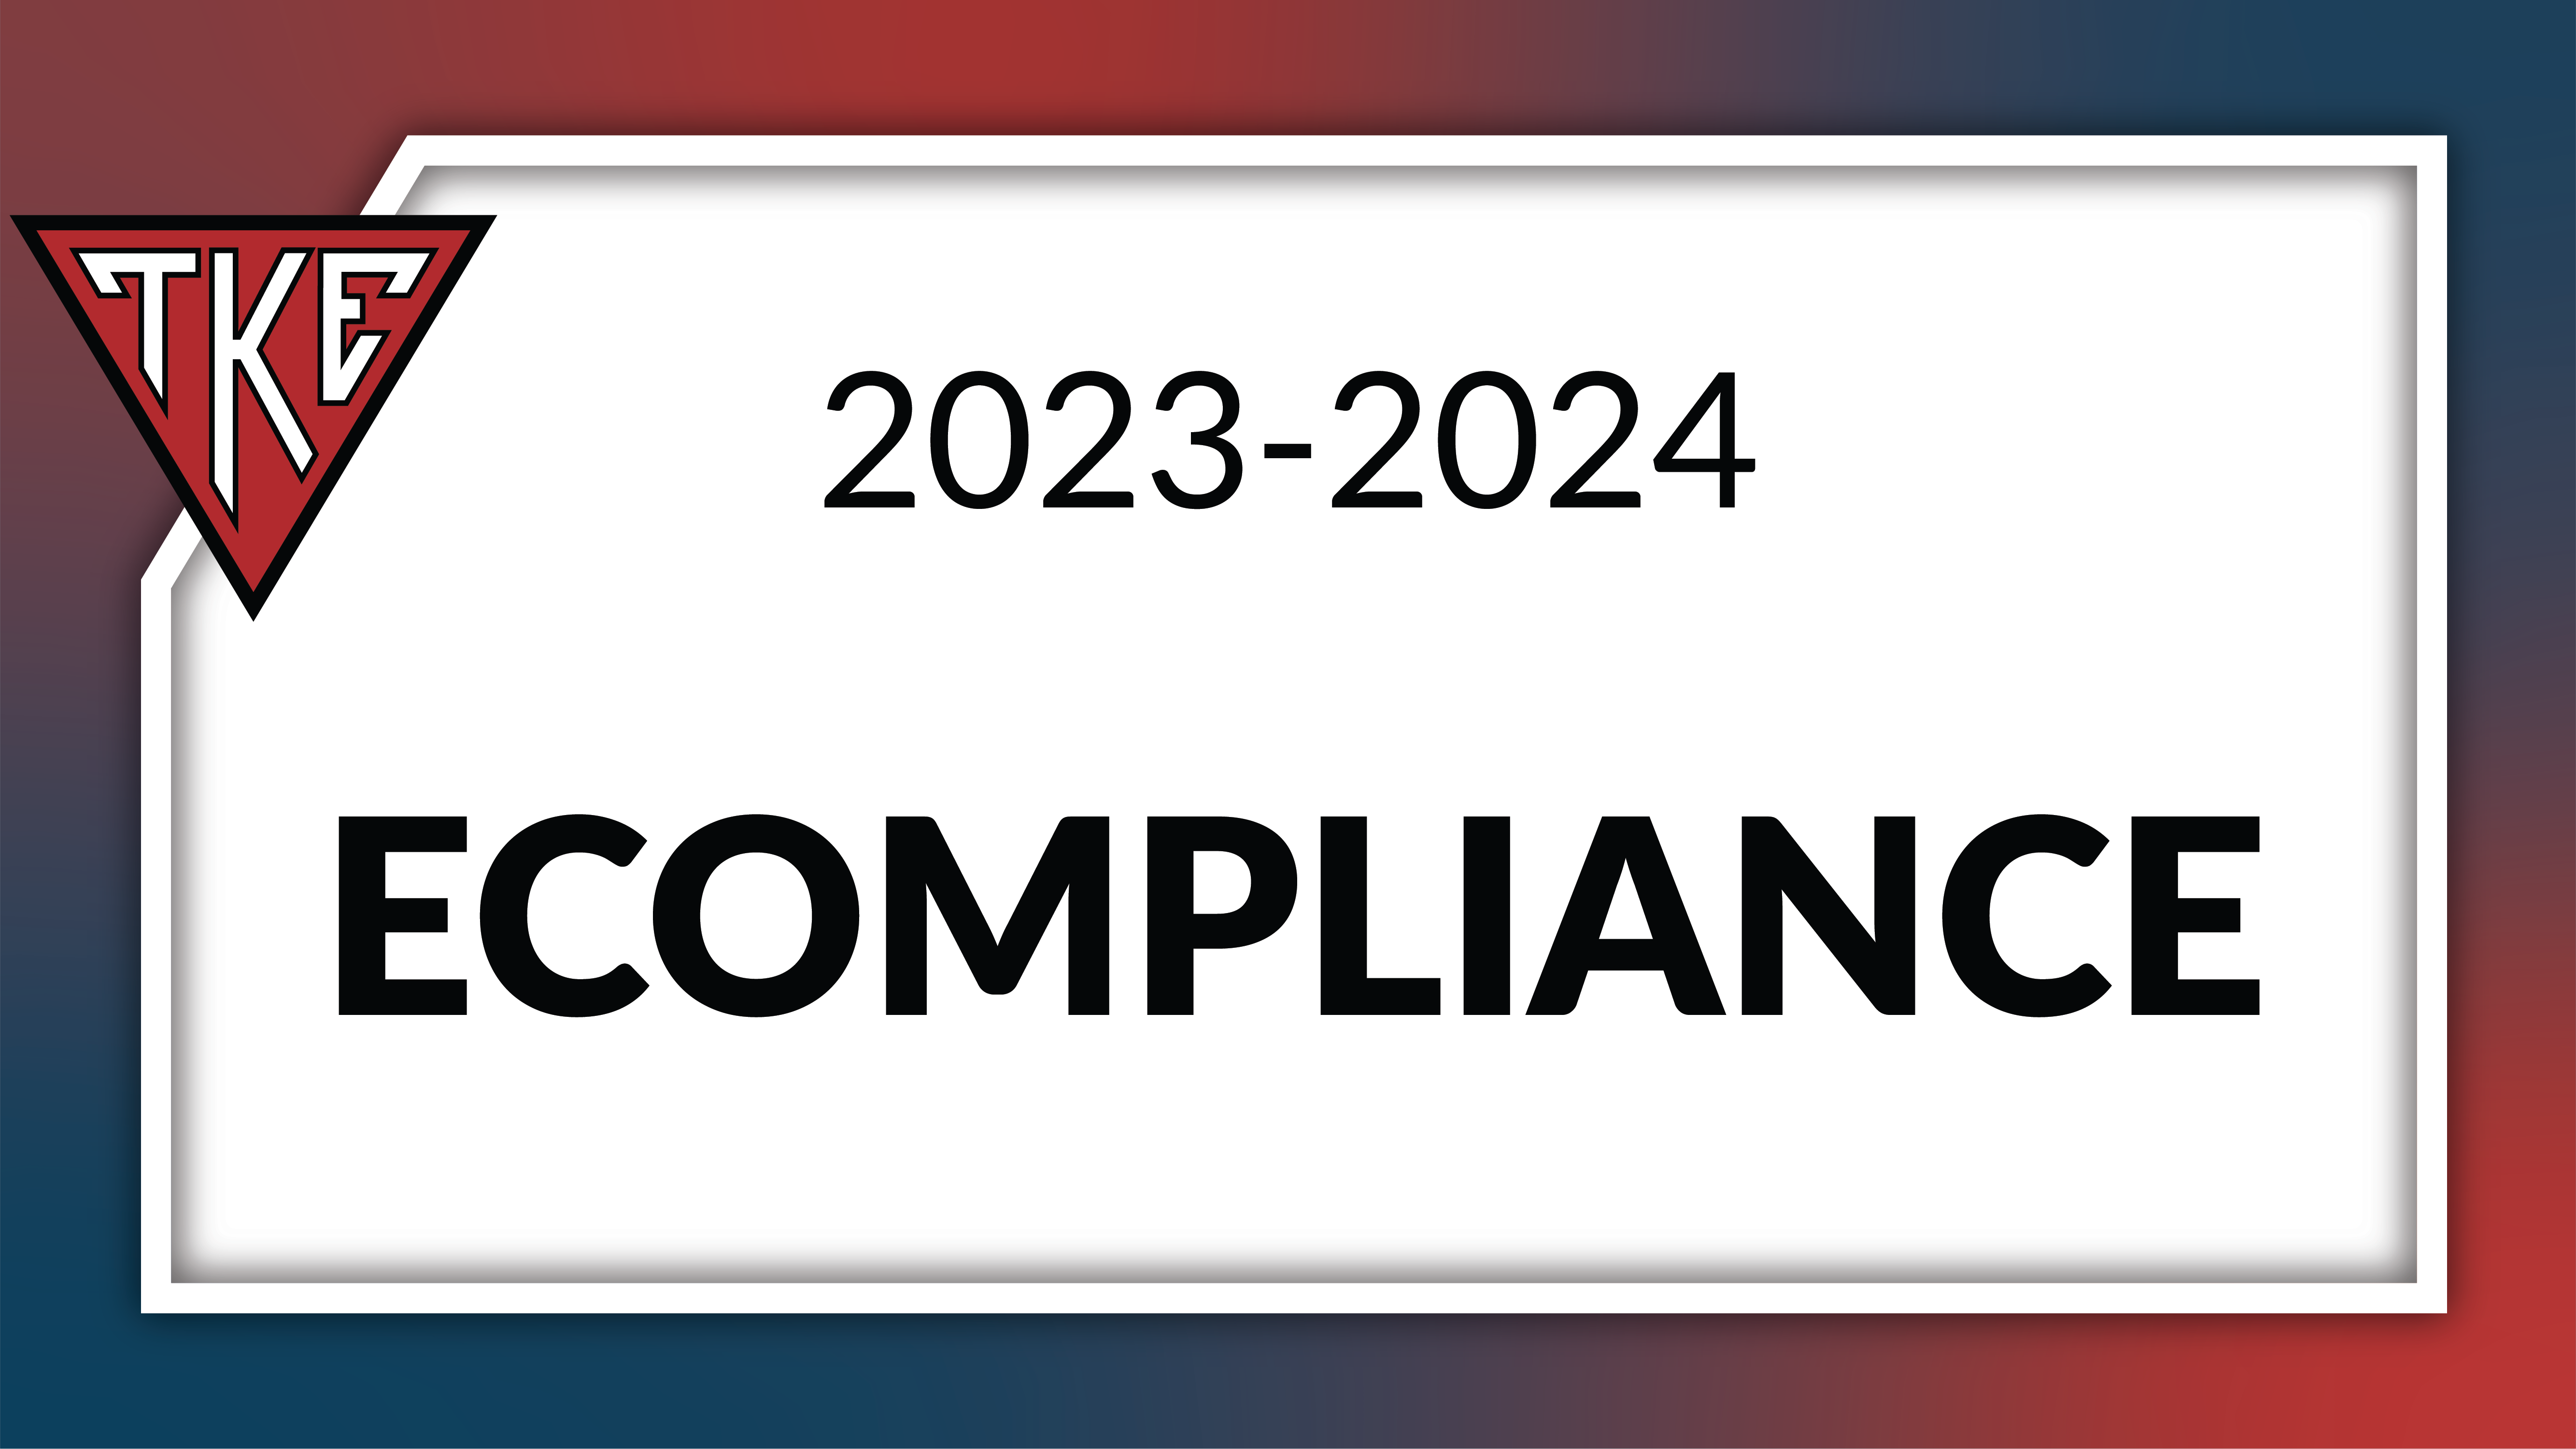 eCompliance 2023-2024